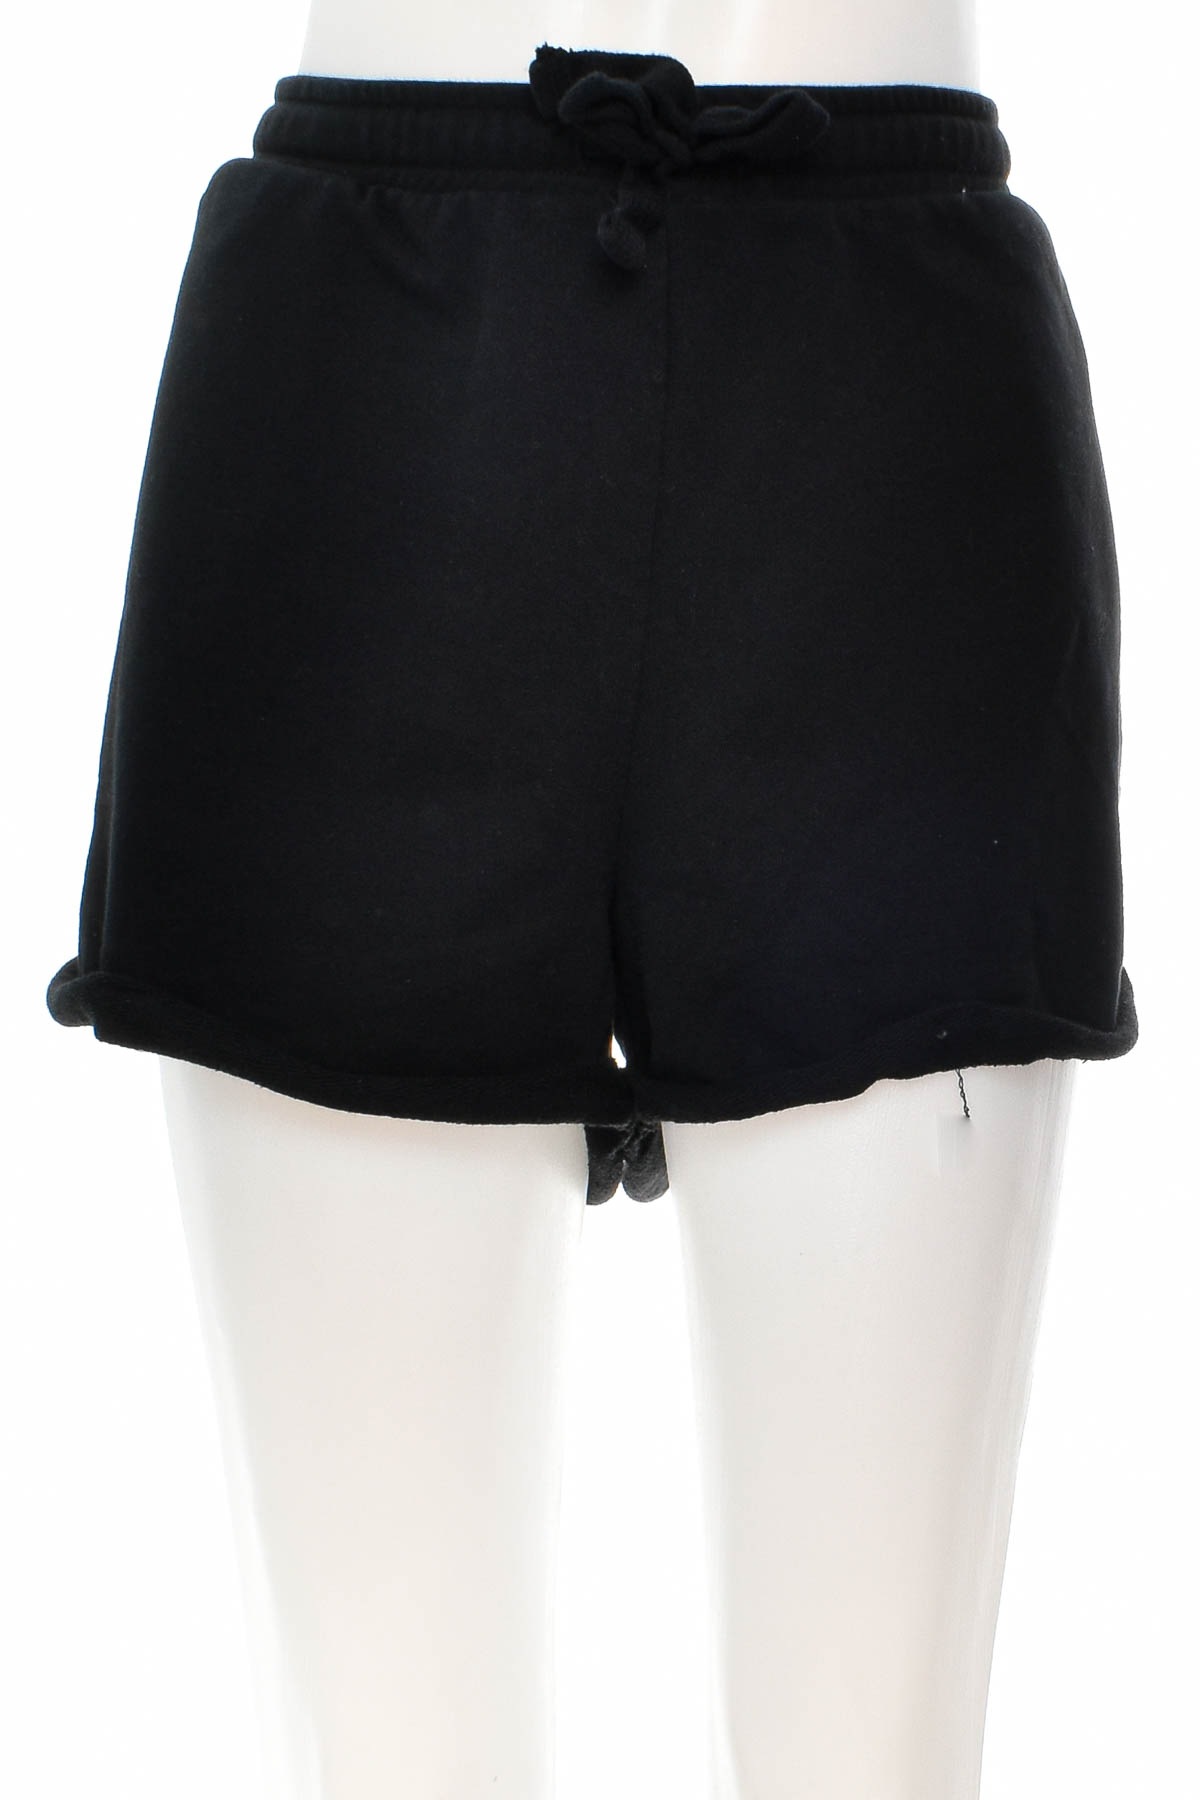 Female shorts - The Basics x C&A - 0